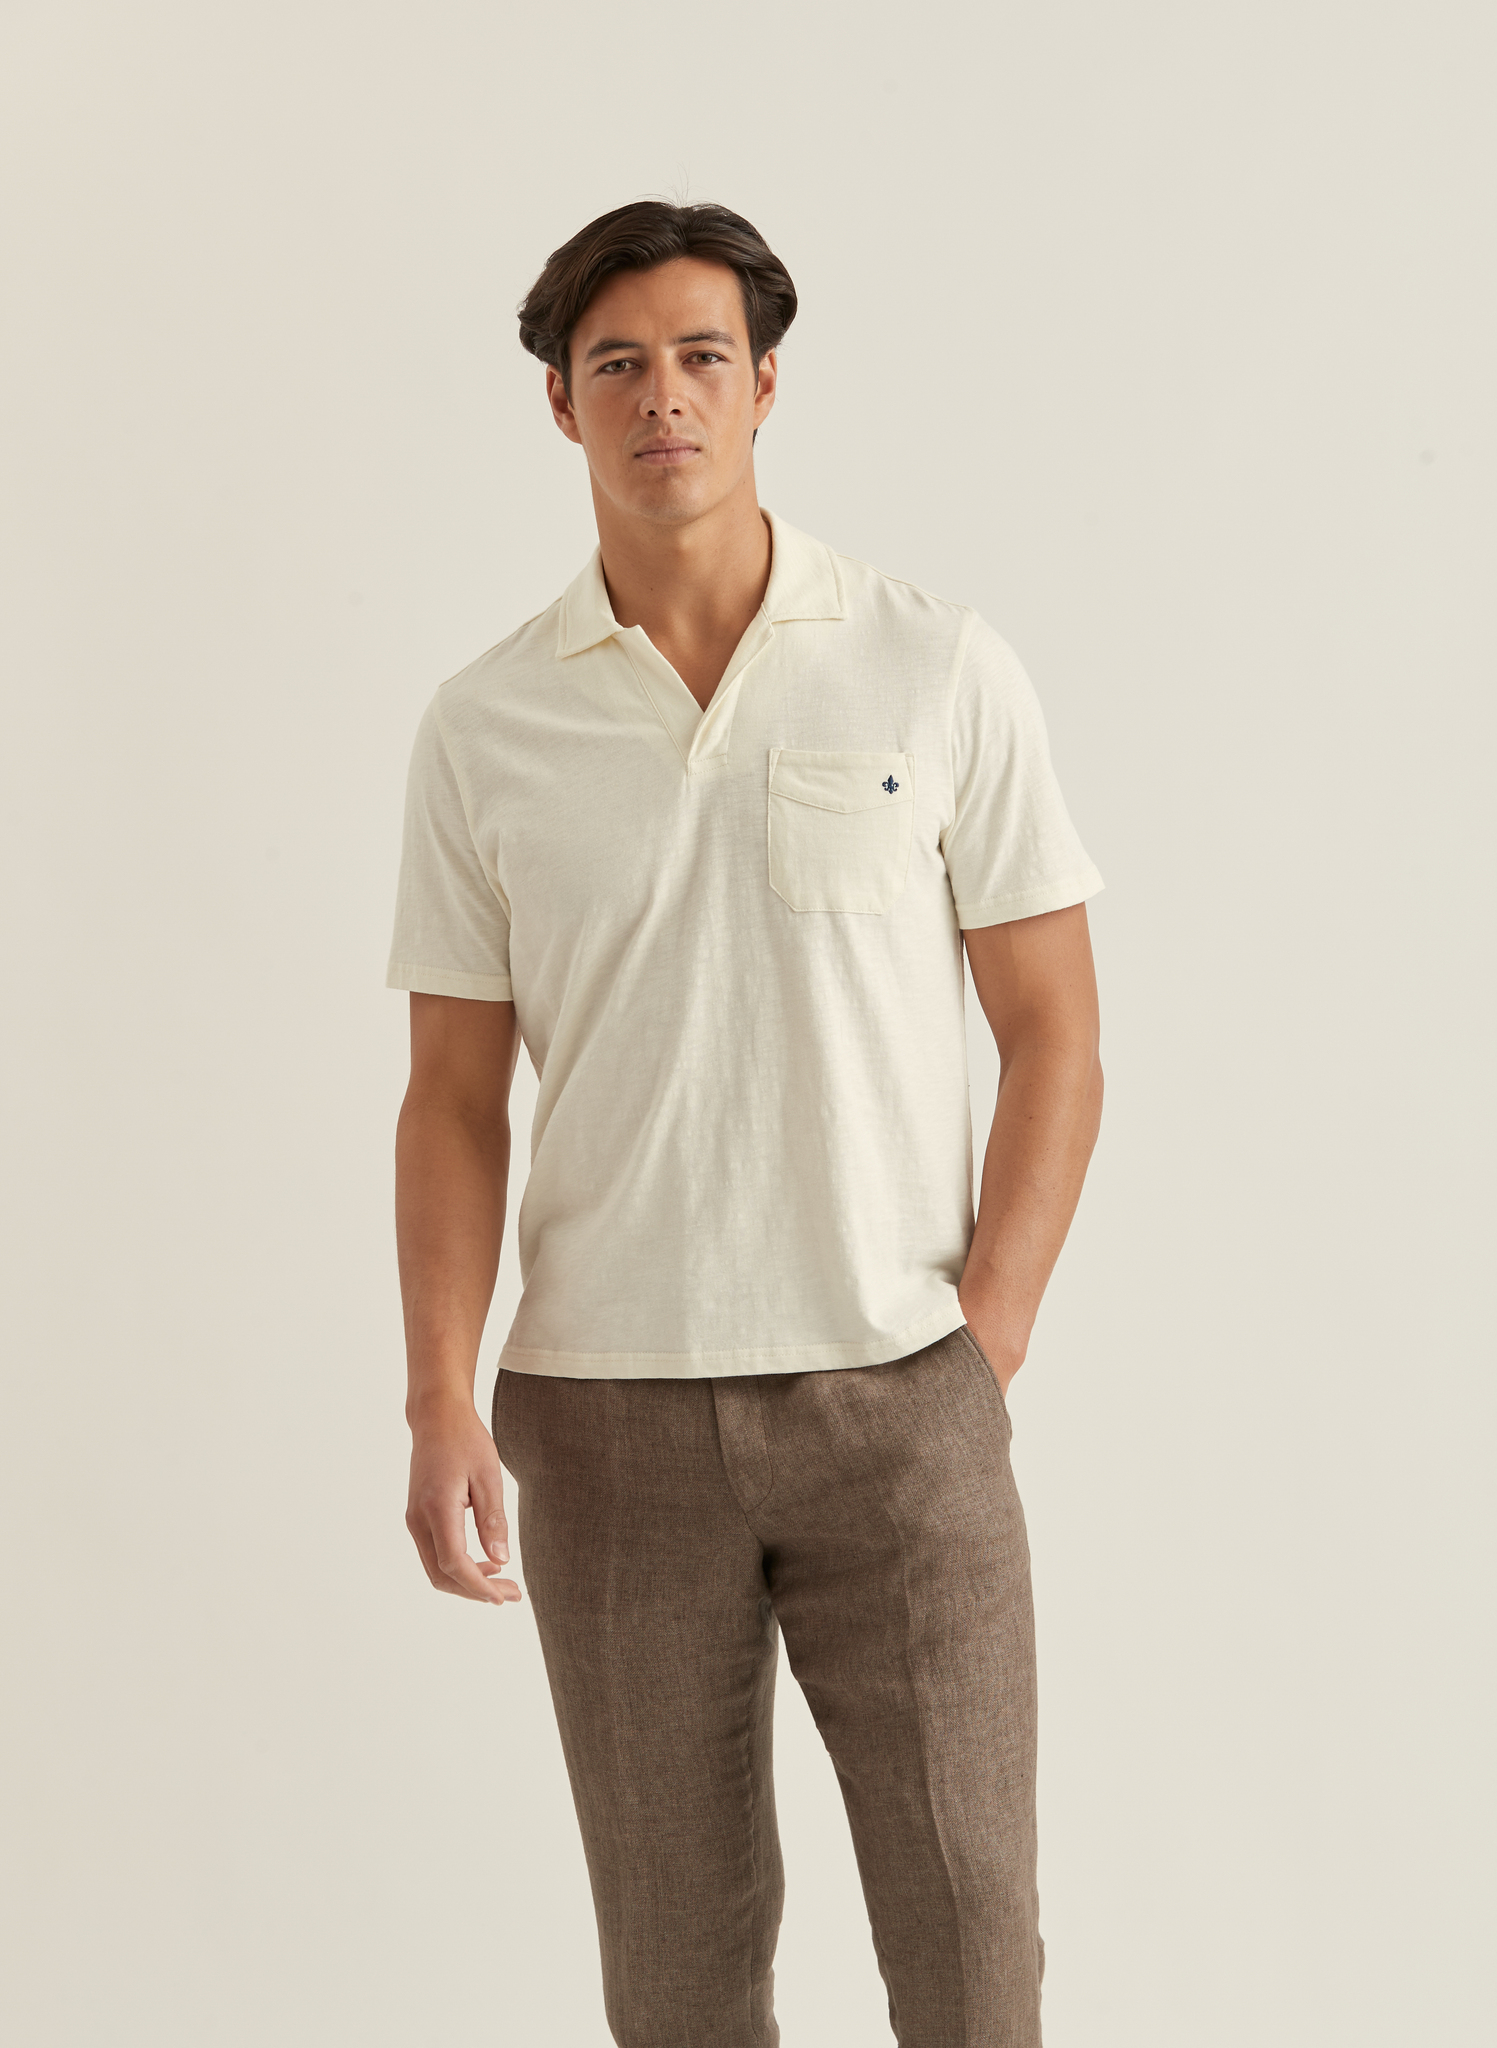 Morris - Clopton Jersey Shirt, Offwhite